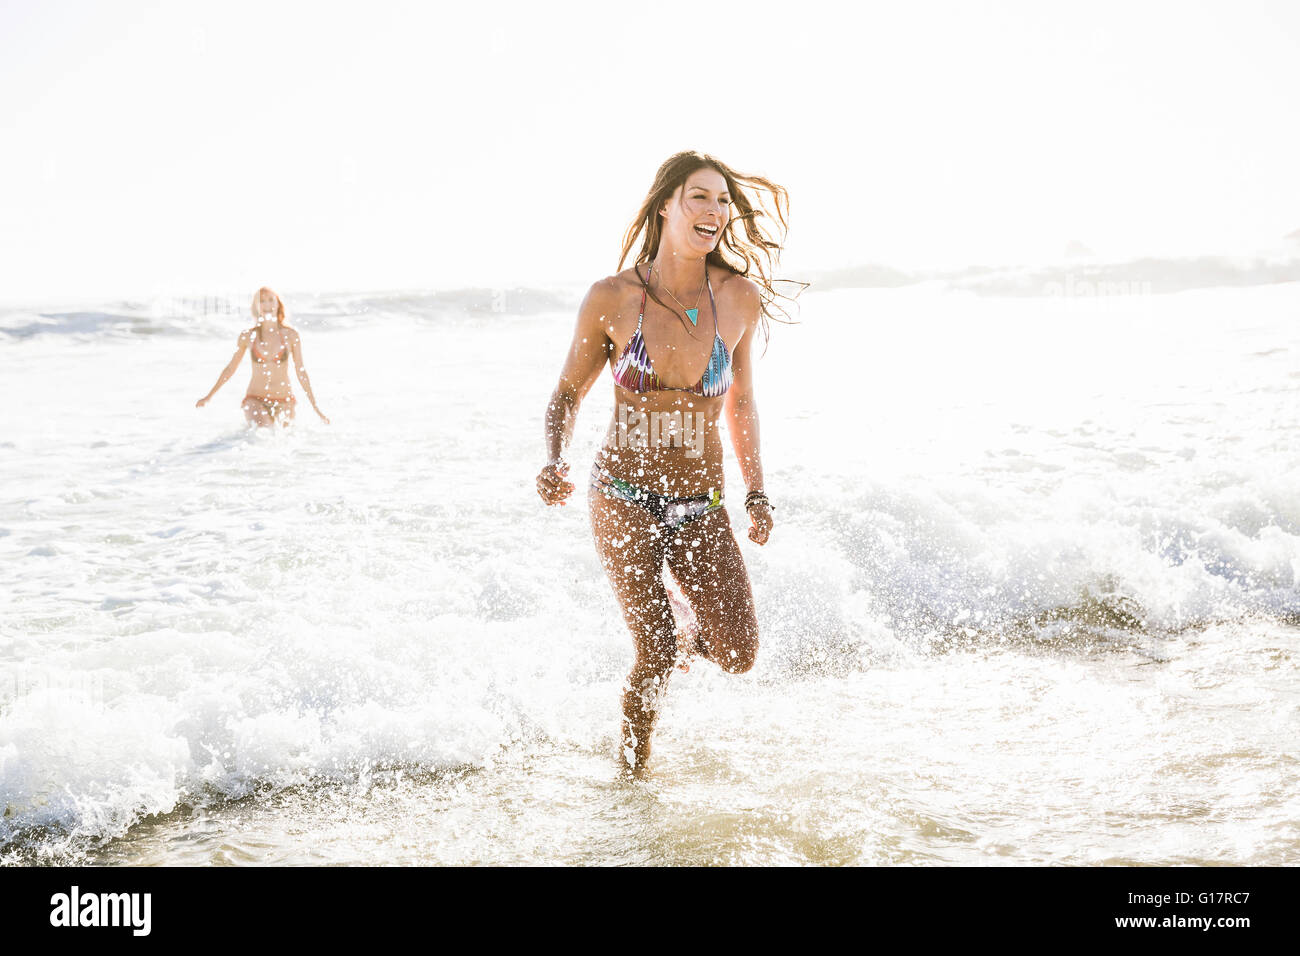 Two women wearing bikini's running in sea, Cape Town, South Africa Stock Photo